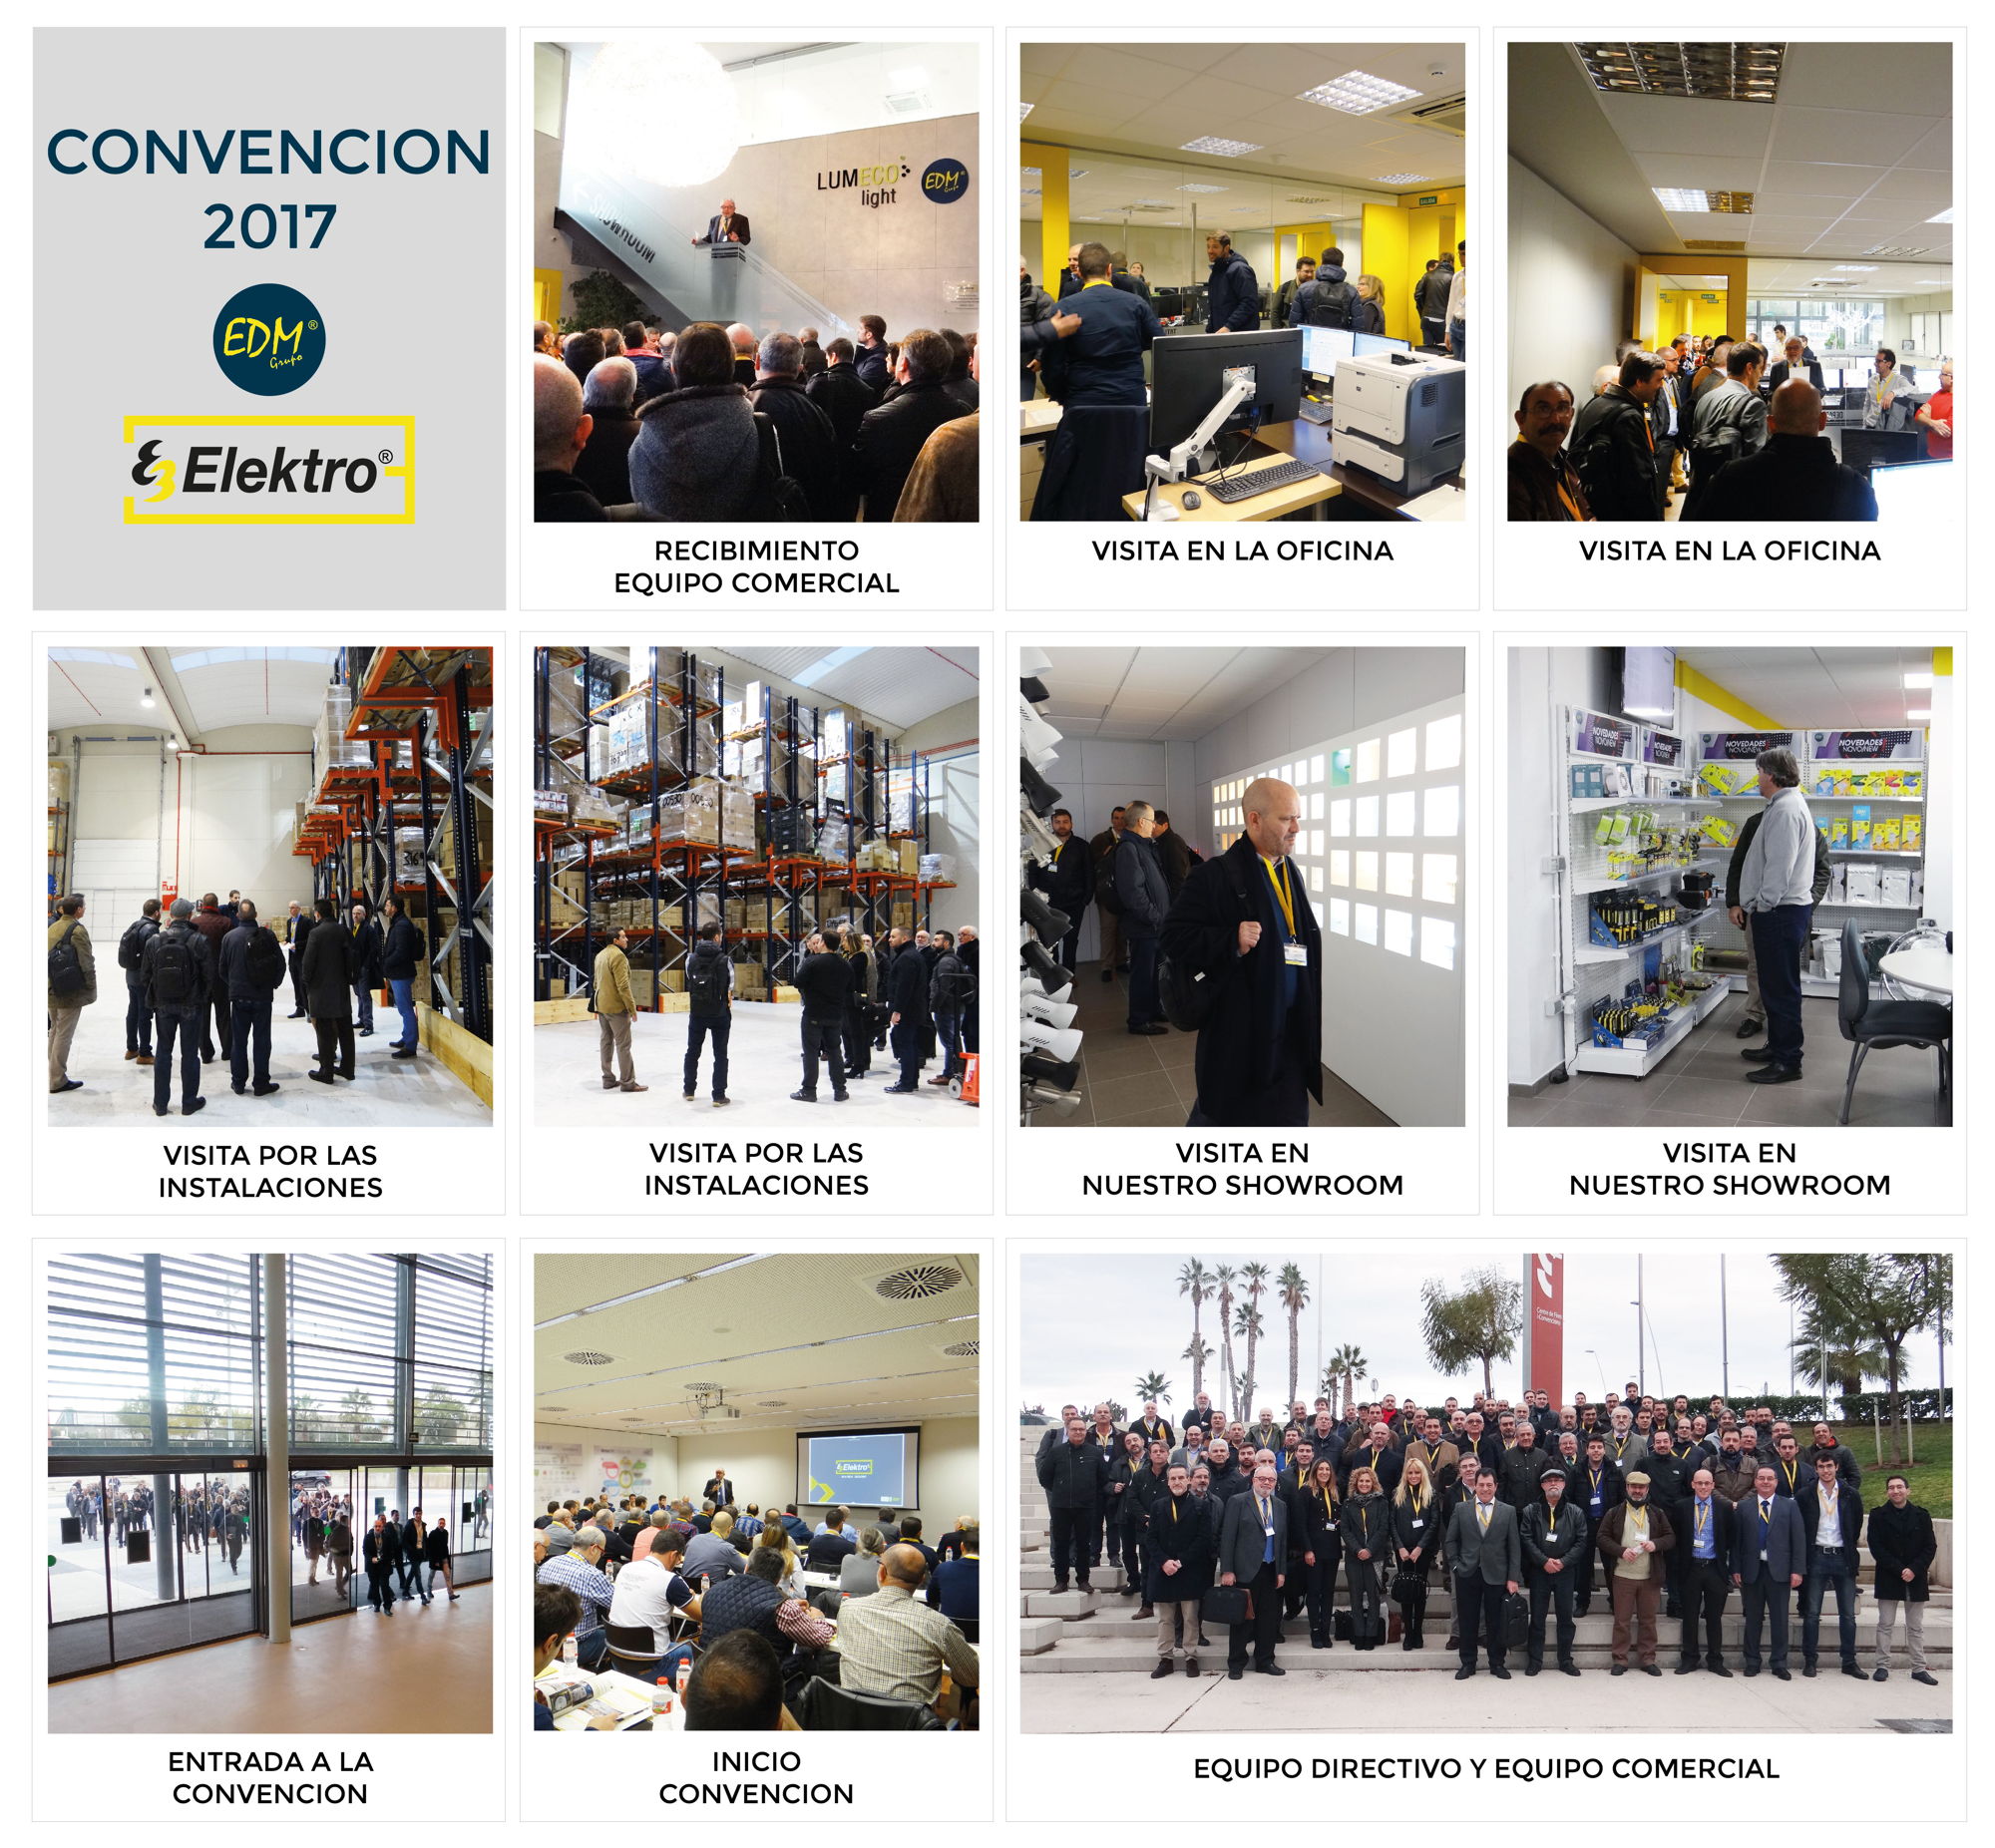 Elektro3 Convention - EDM Group 2017